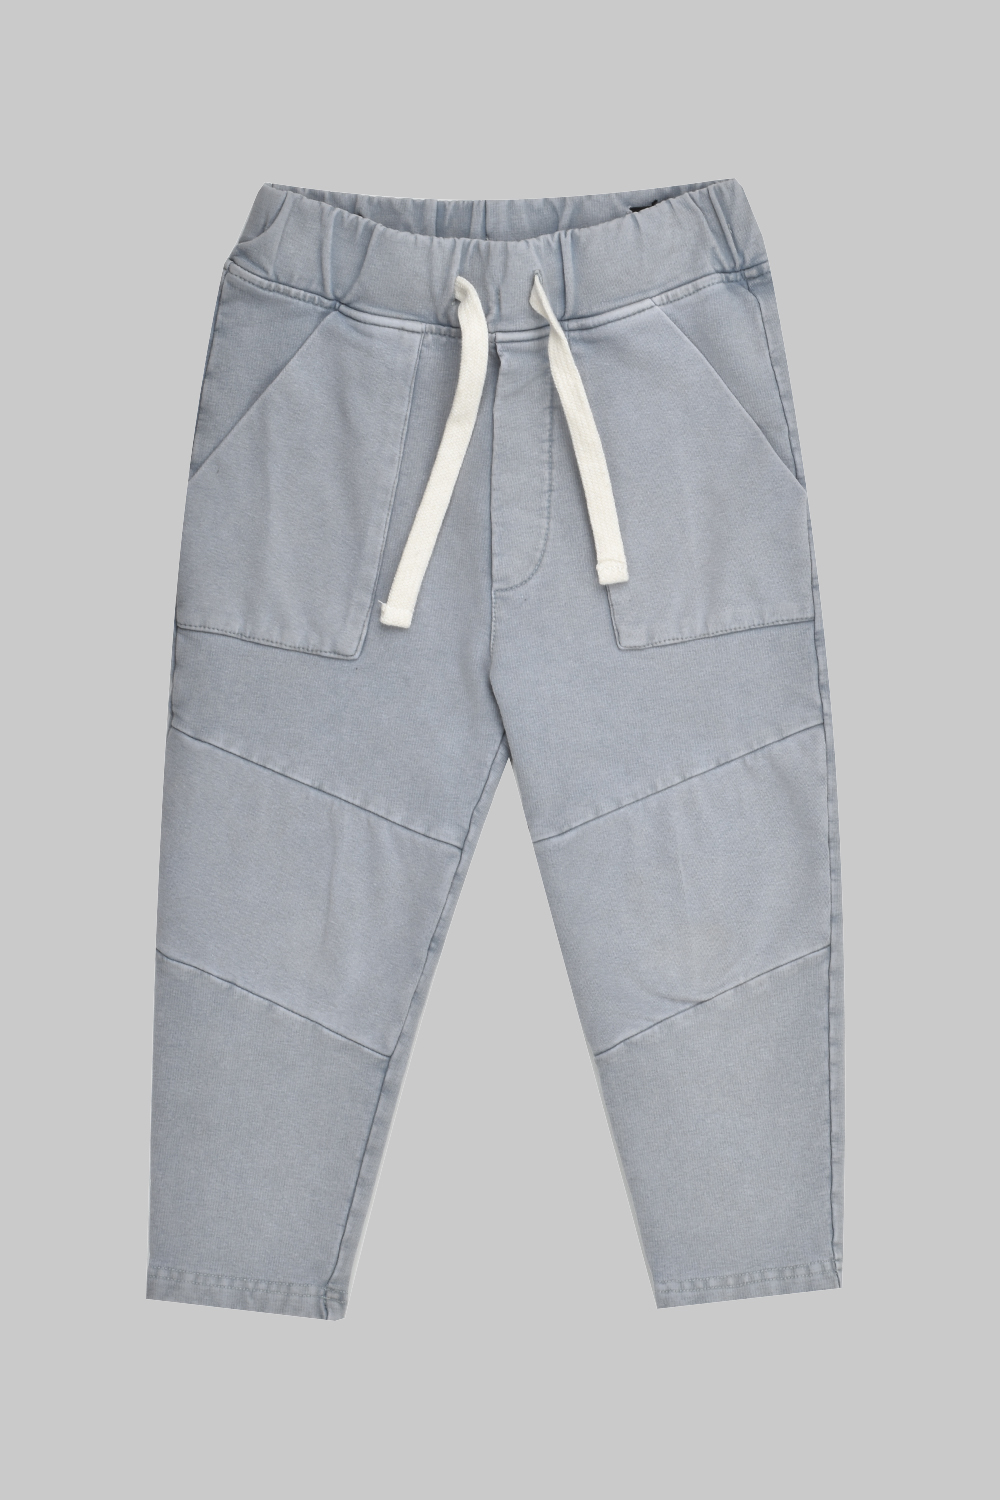 Stone Blue Pocket Pants